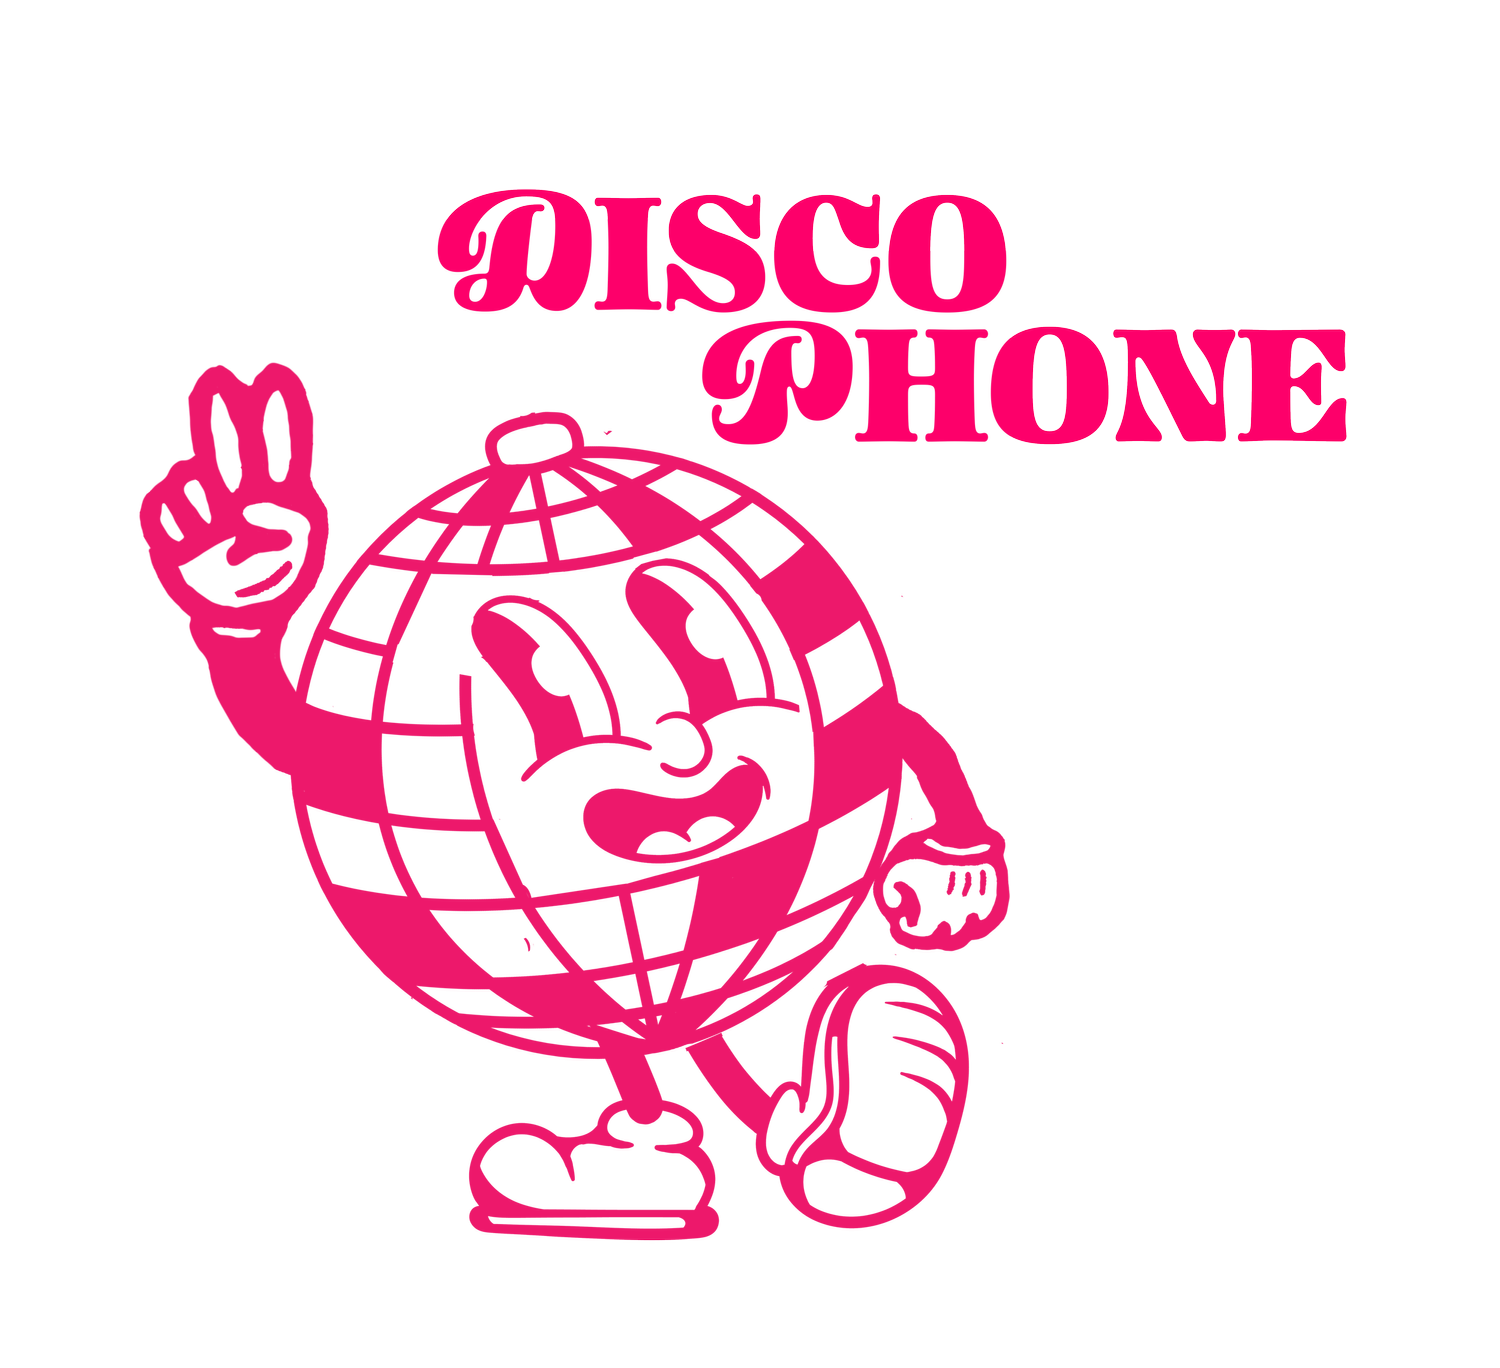 Disco Phone